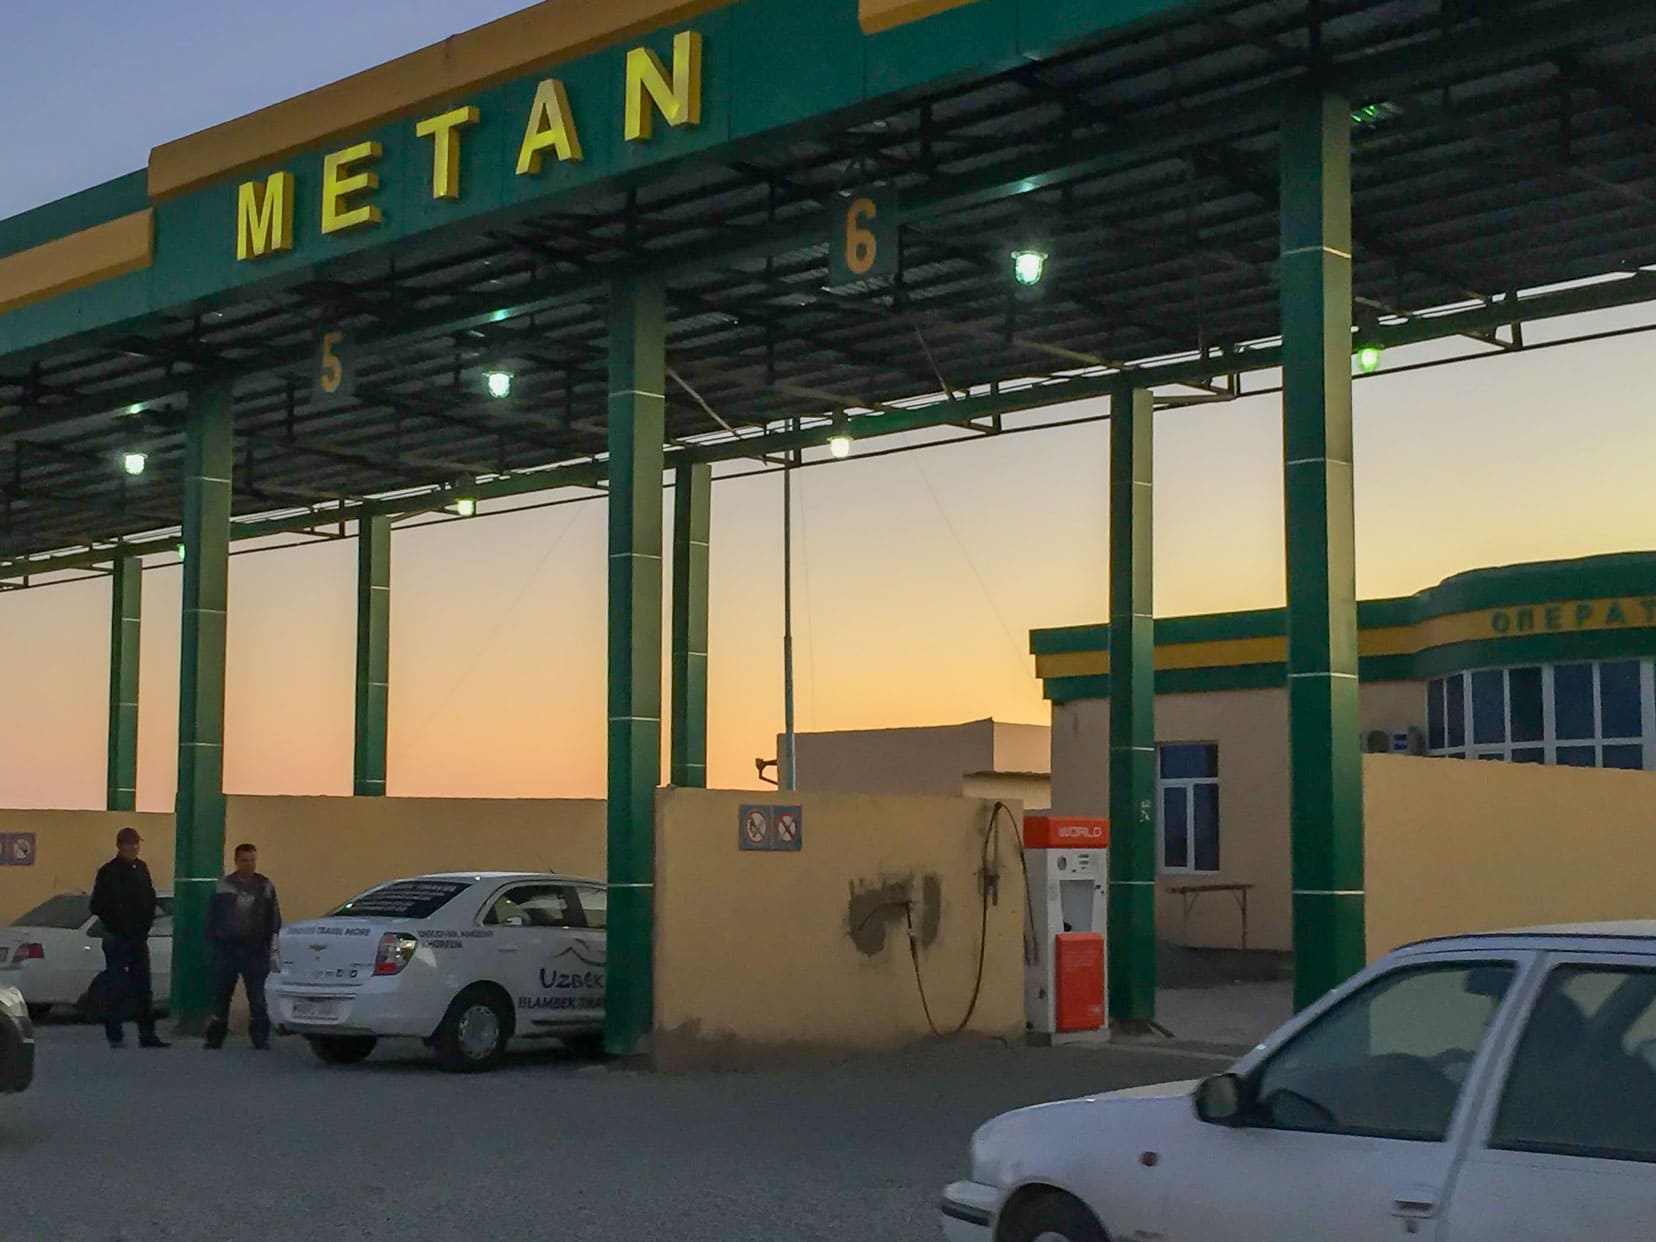 Metan methane fuel stop, Karakalpakstan